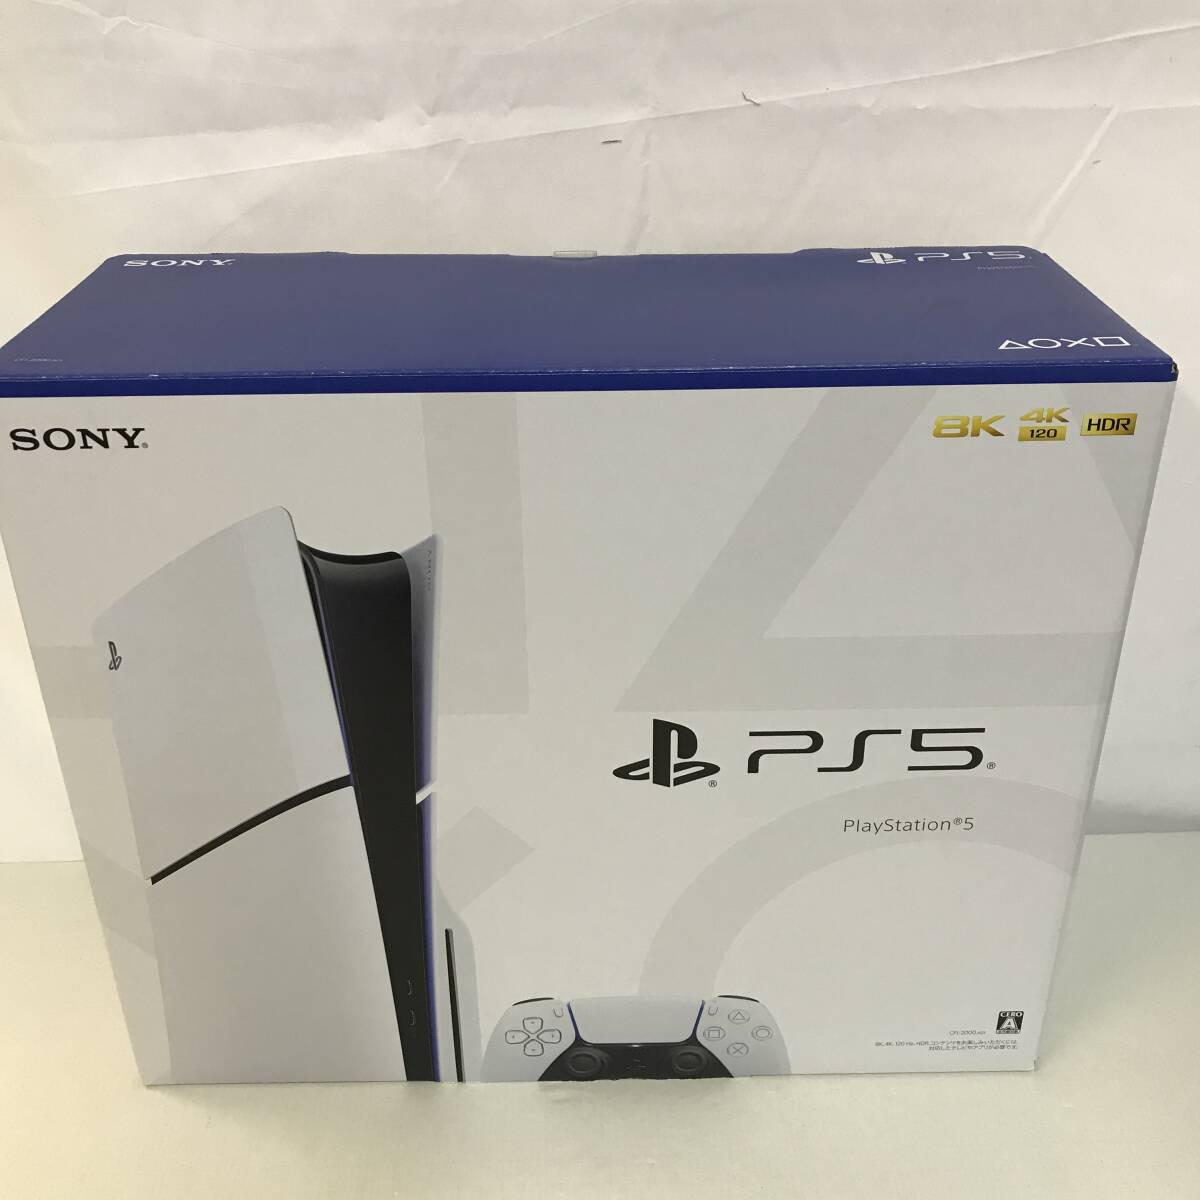 35　SONY Playstation5 PS5 CFI-2000 本体 中古品 (140)　01_画像1